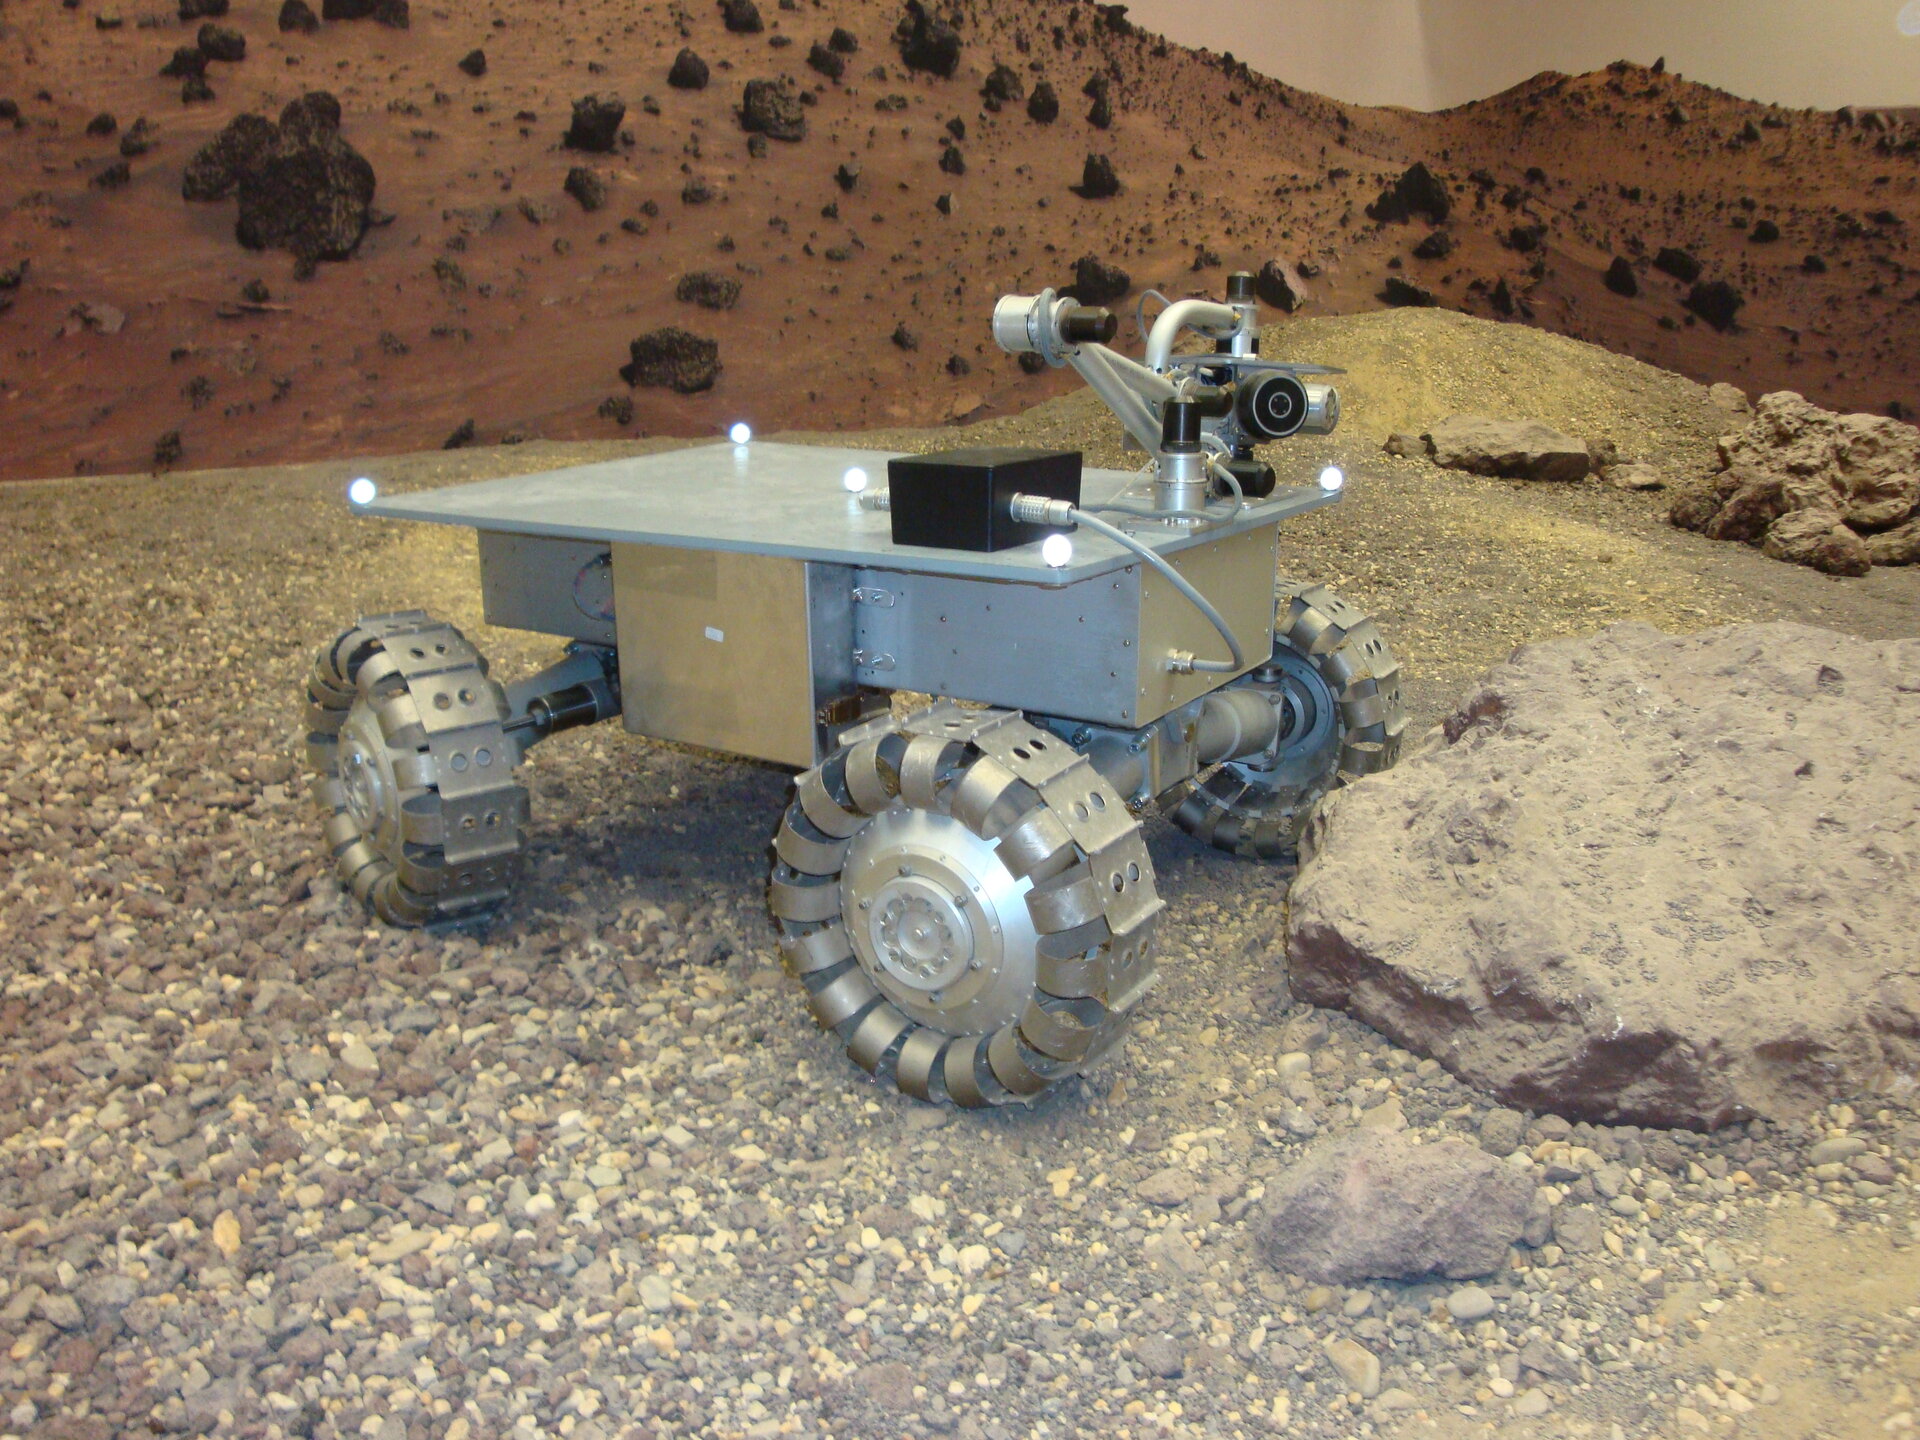 Prototype rover in Mars Yard